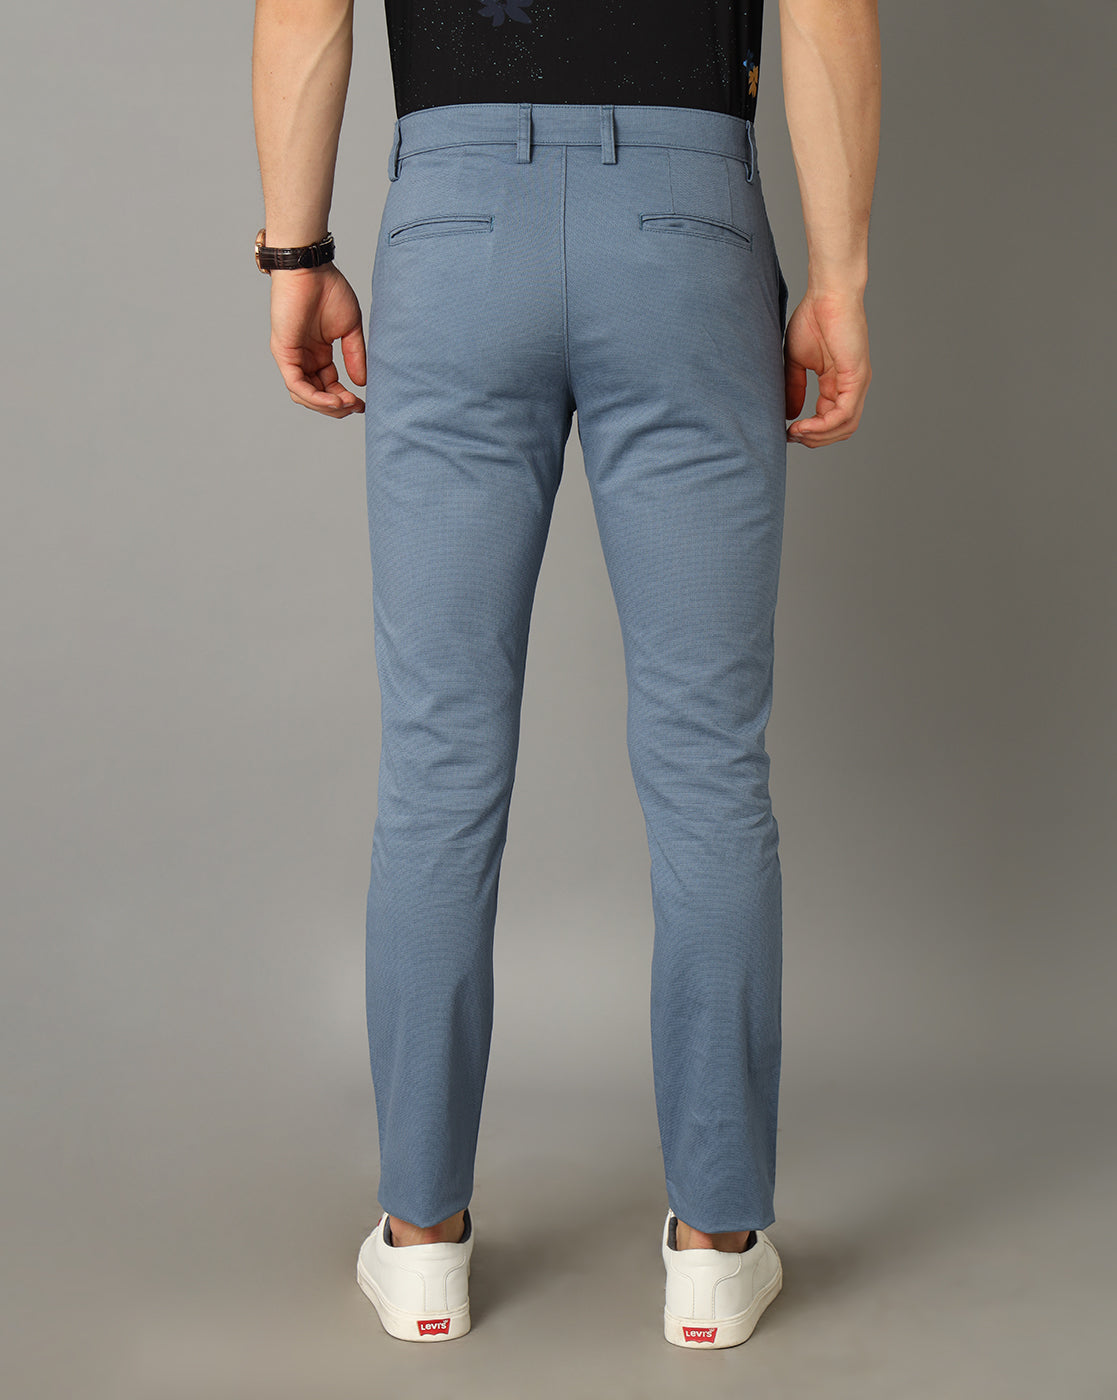 Classic Navy Blue Custom Pants - Hangrr